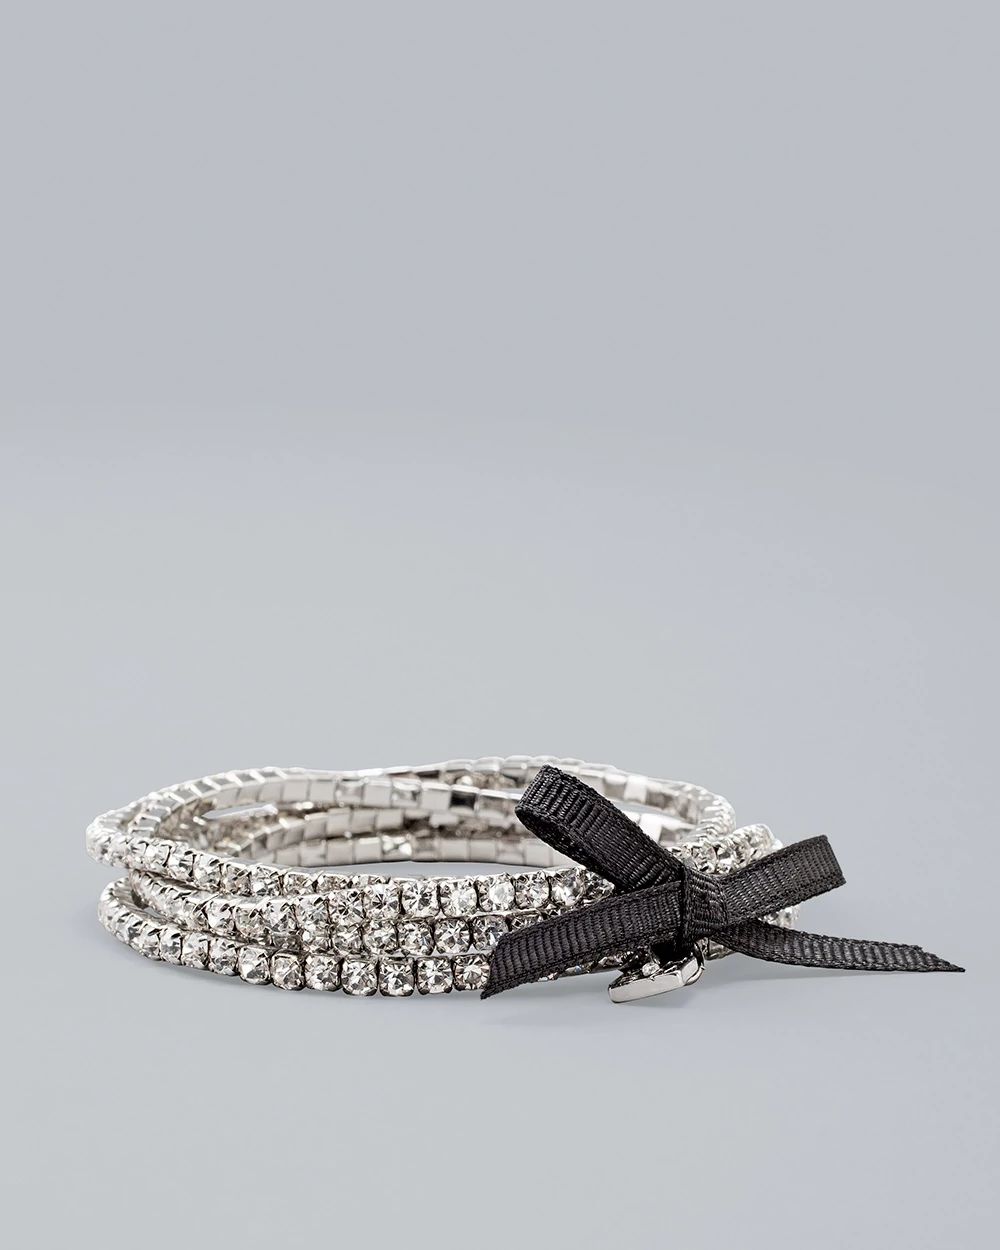 Silvertone Rhinestone Stretch Bracelets, Set of 5